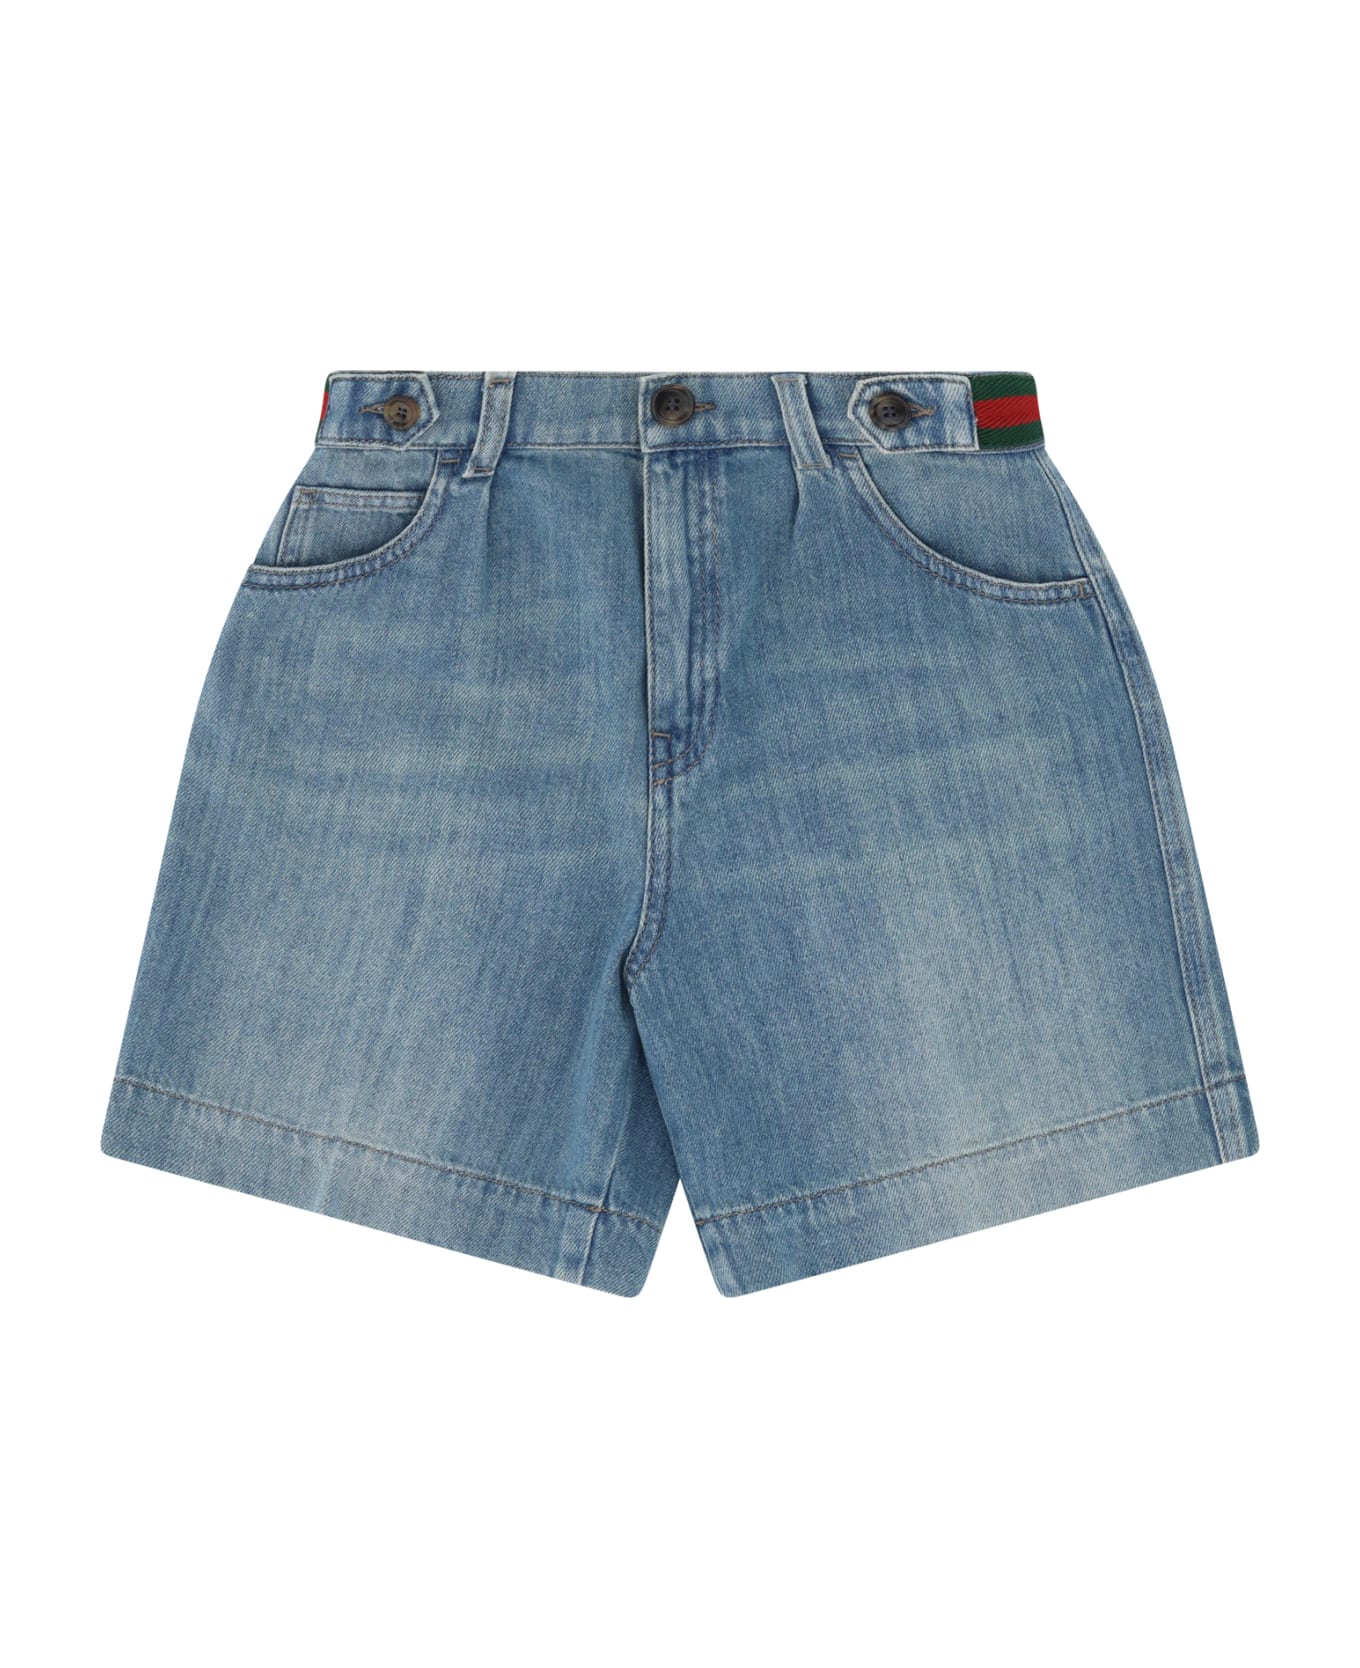 Gucci Bermuda Shorts For Boy - Blue/mix